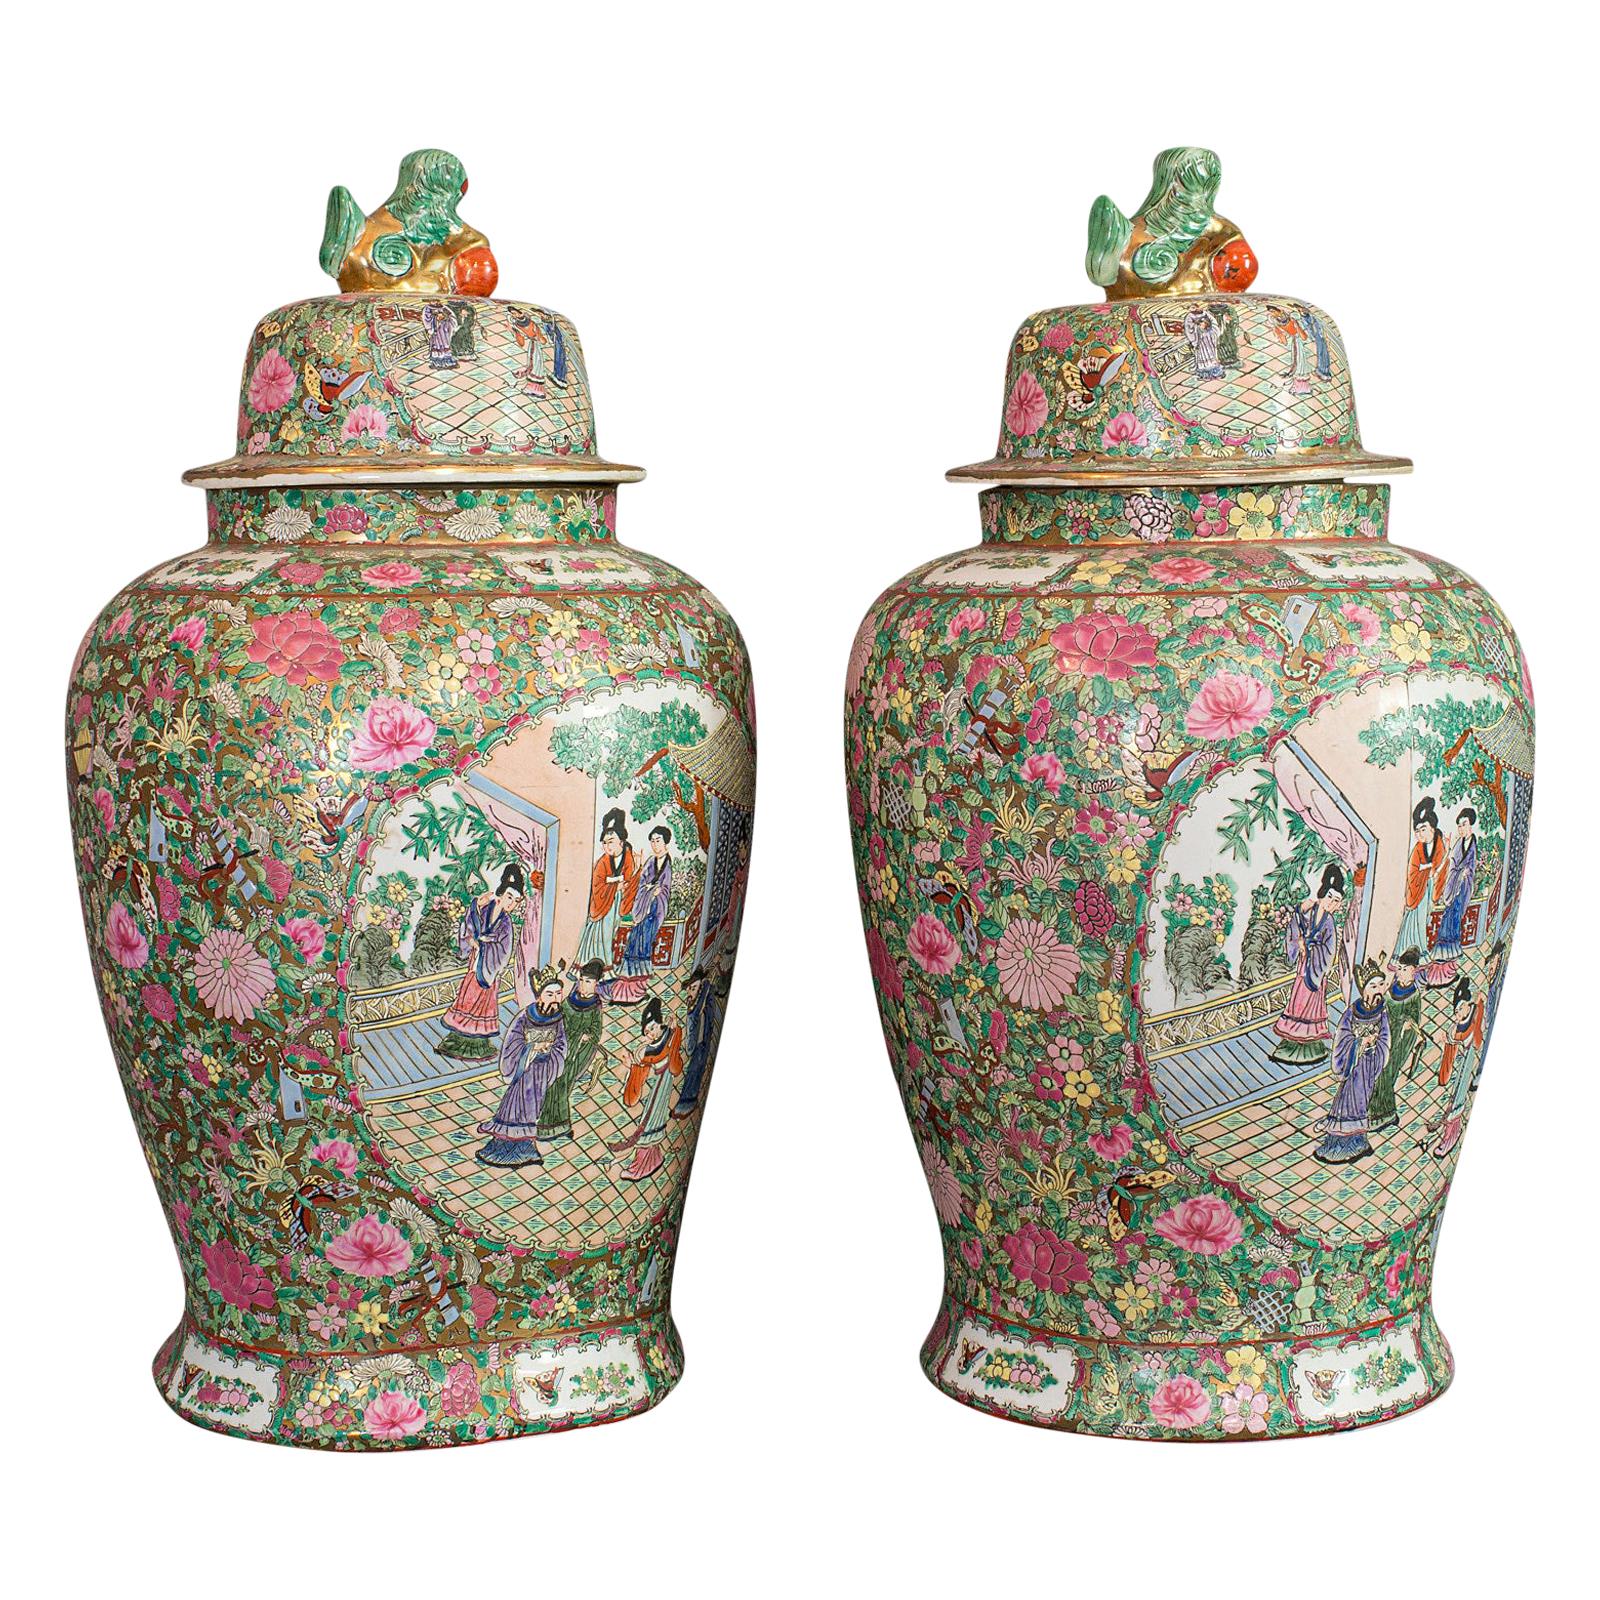 Pair of Large Vintage Baluster Urns, Oriental, Ceramic, Art Deco, circa 1940